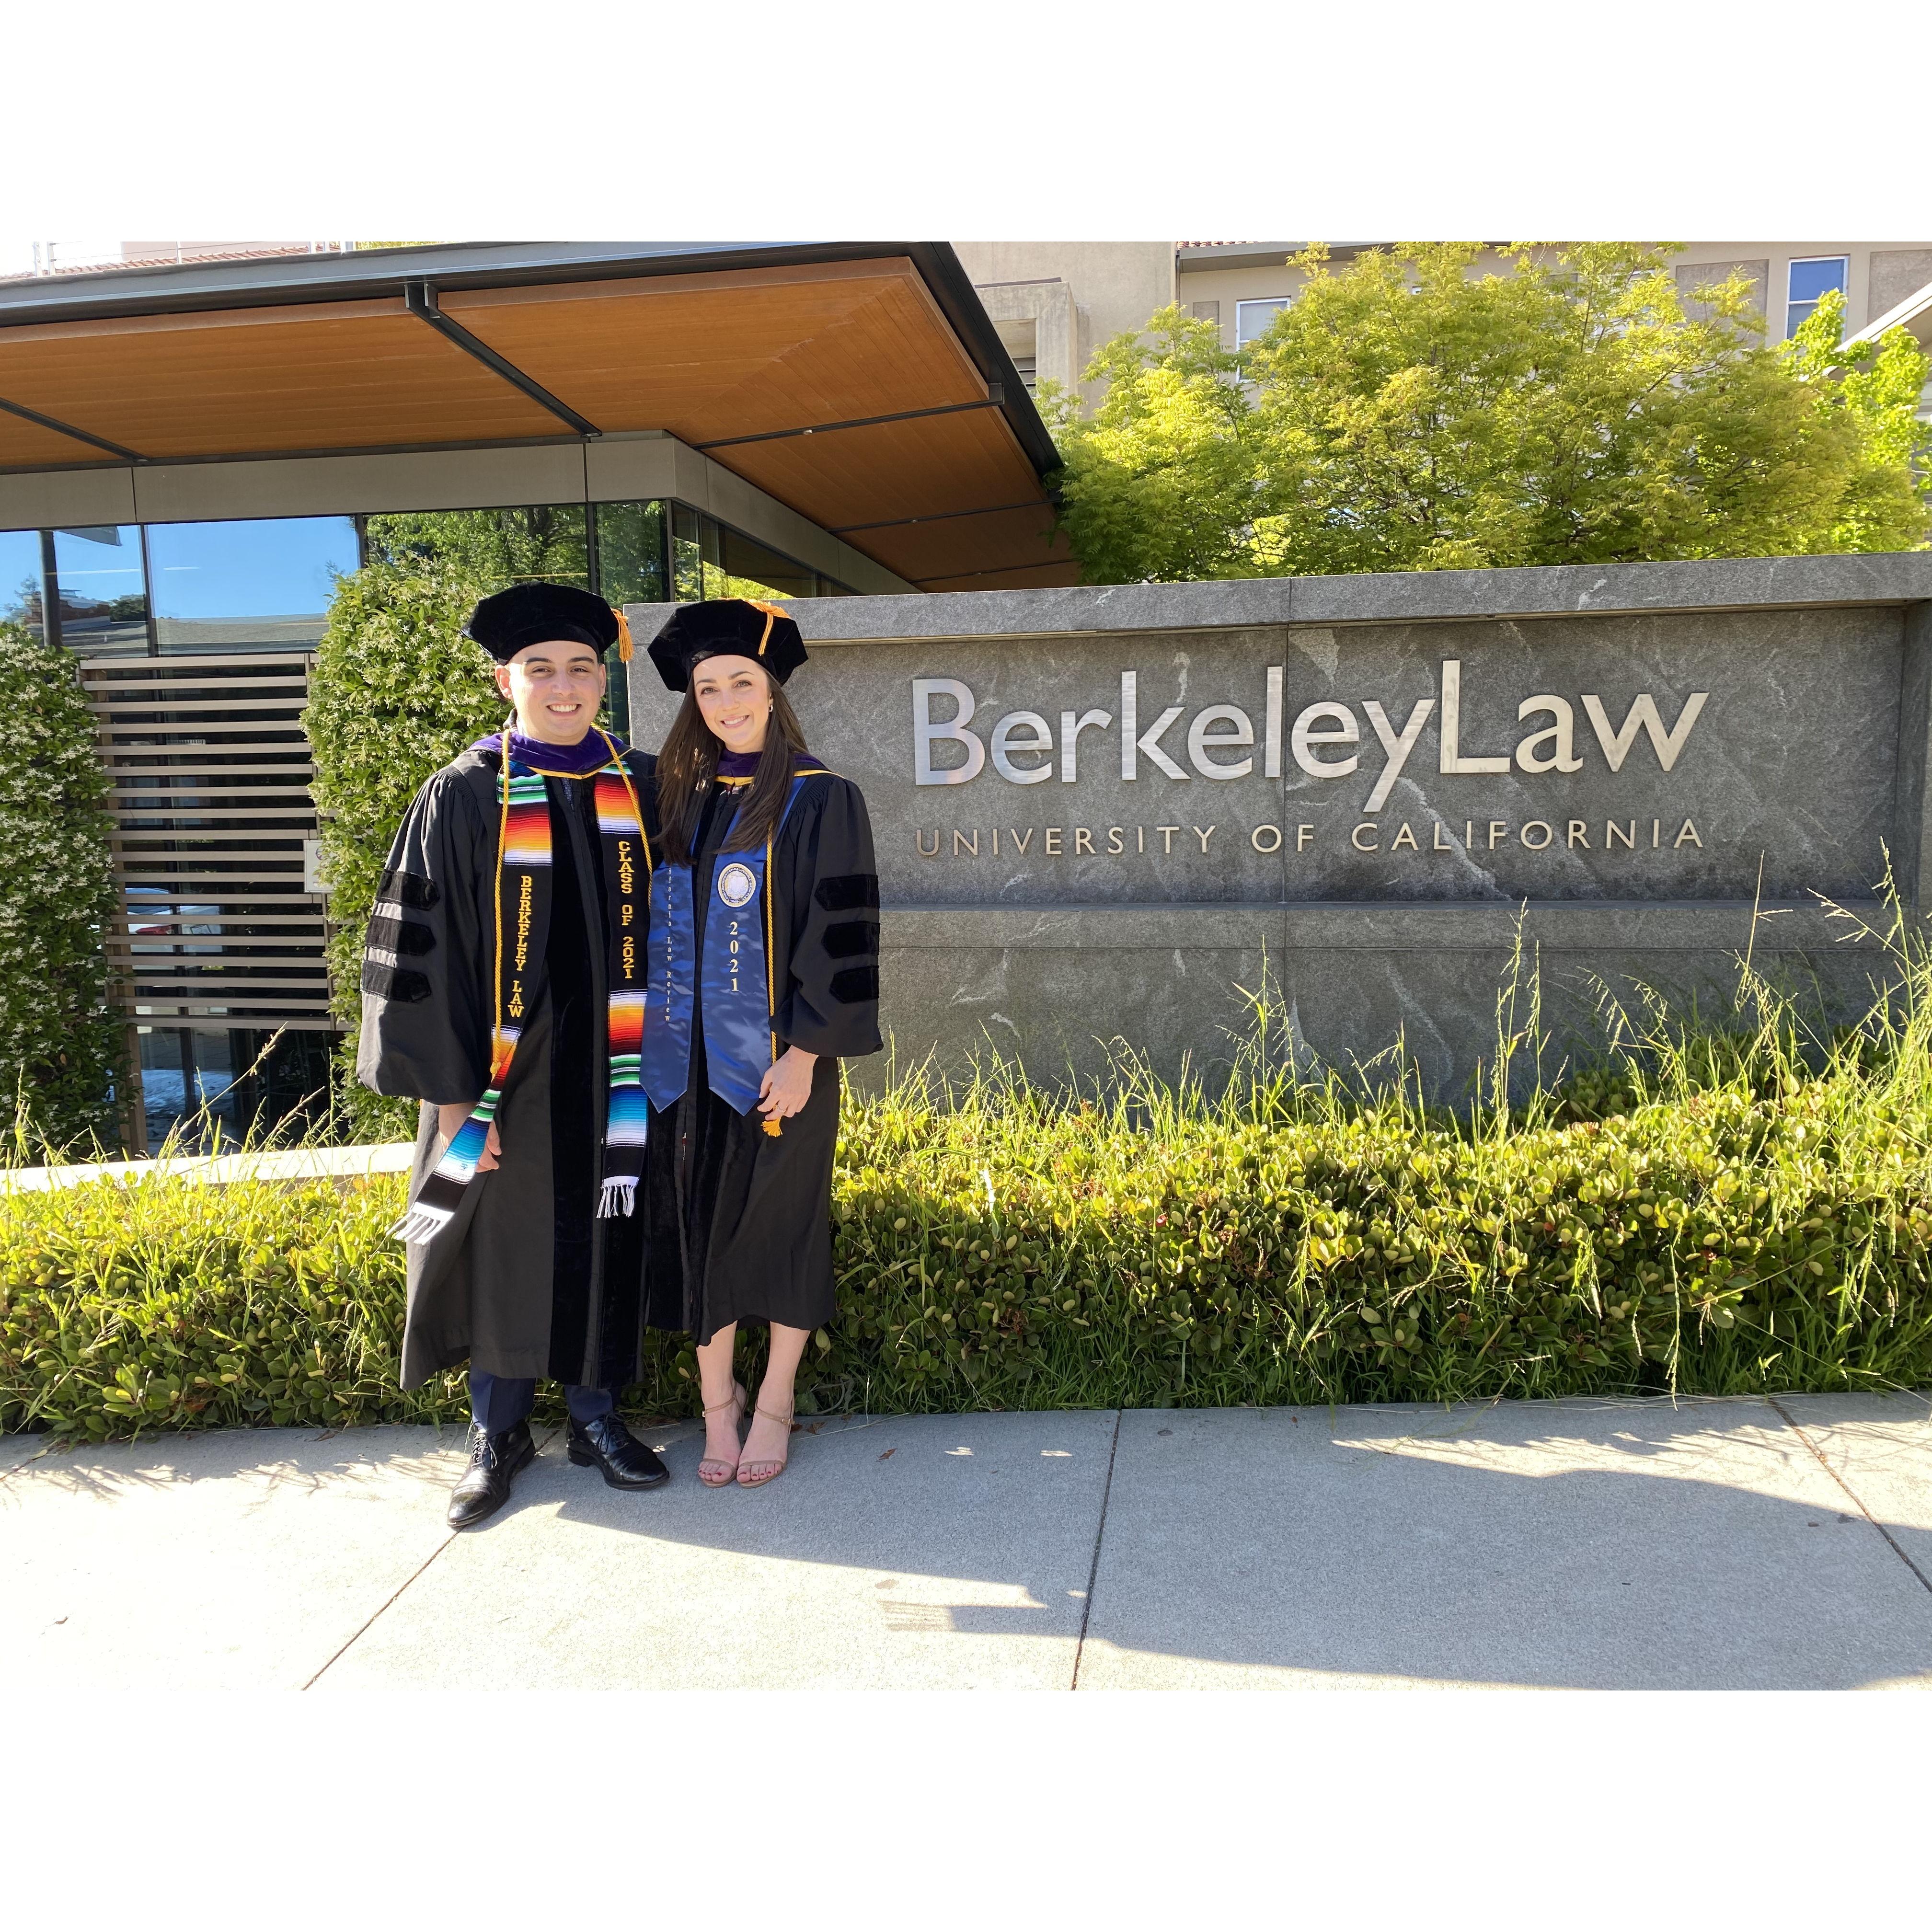 Law School graduation!